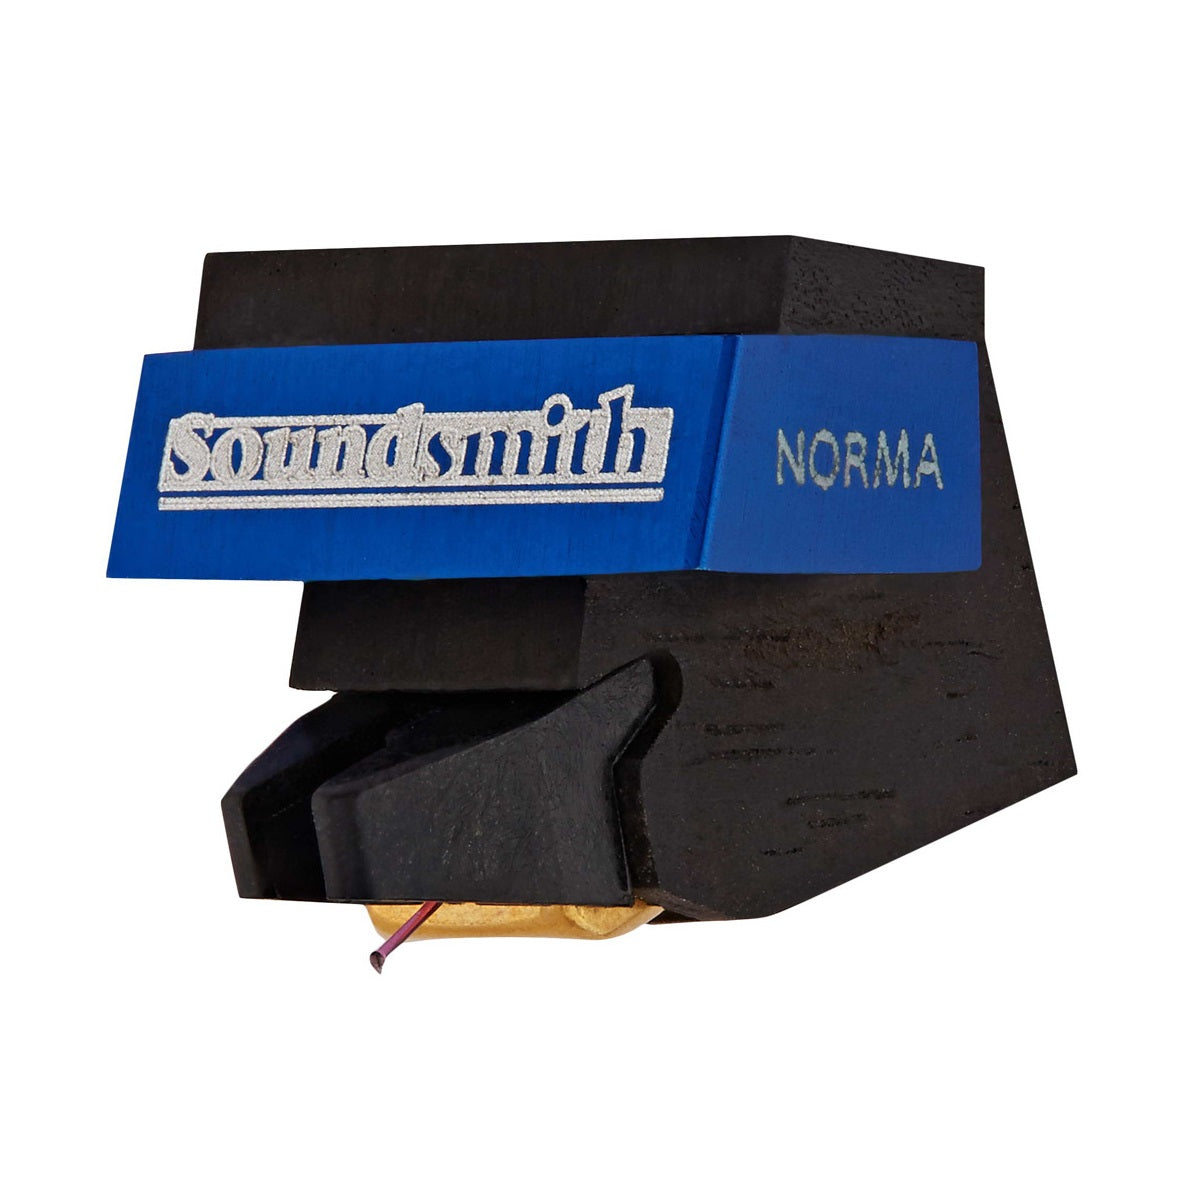 Soundsmith NORMA Moving Iron Cartridge